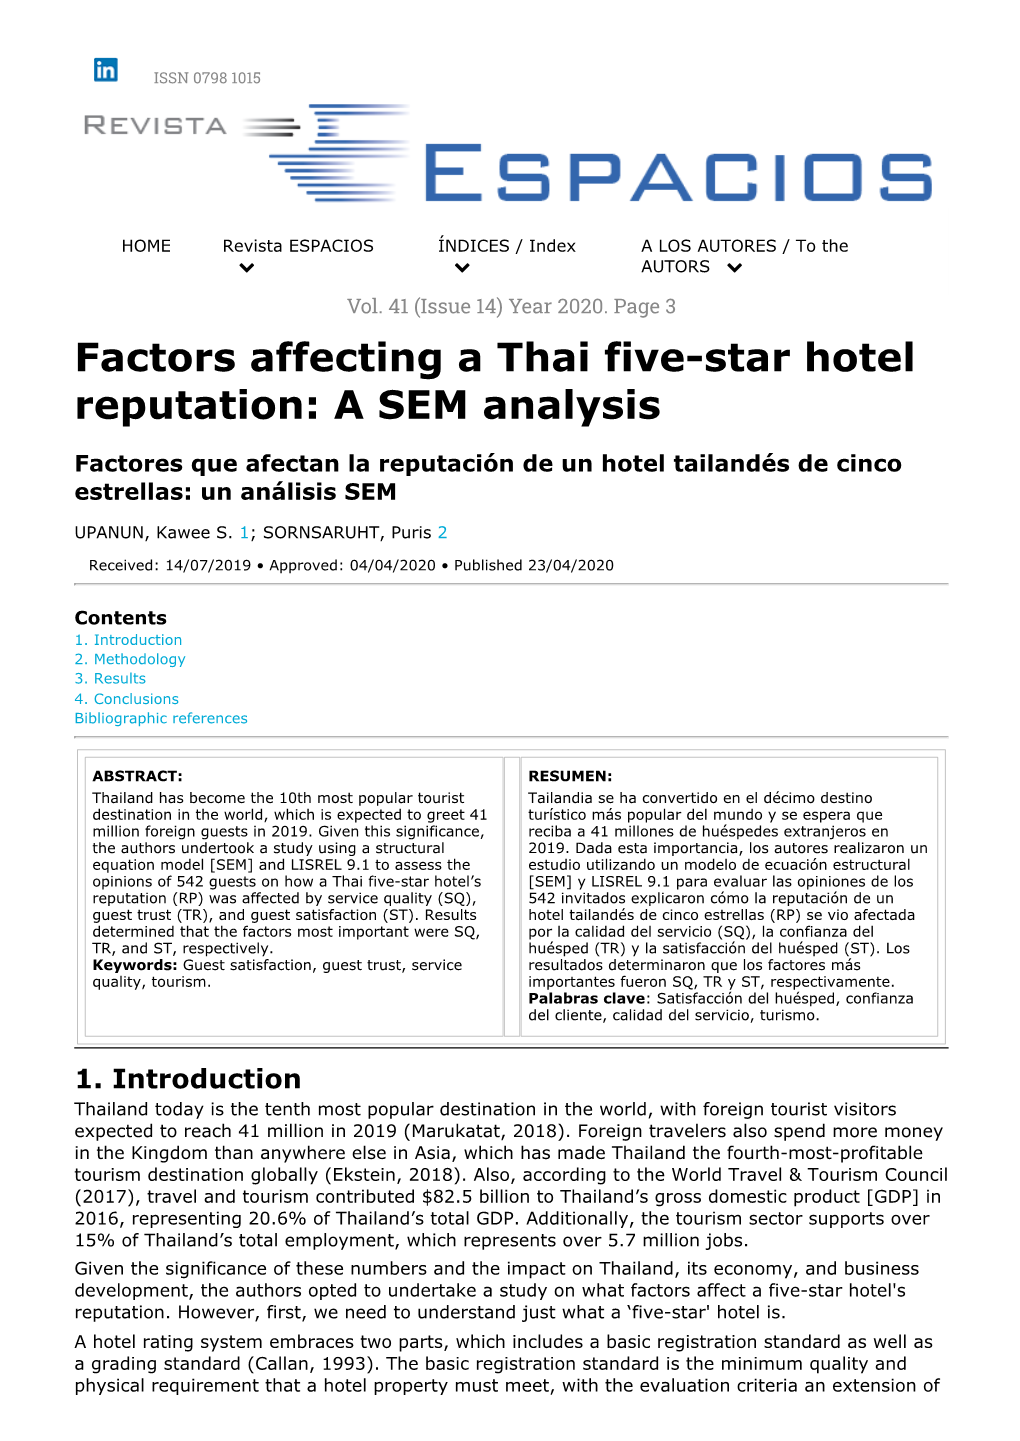 Factors Affecting a Thai Five-Star Hotel Reputation: a SEM Analysis